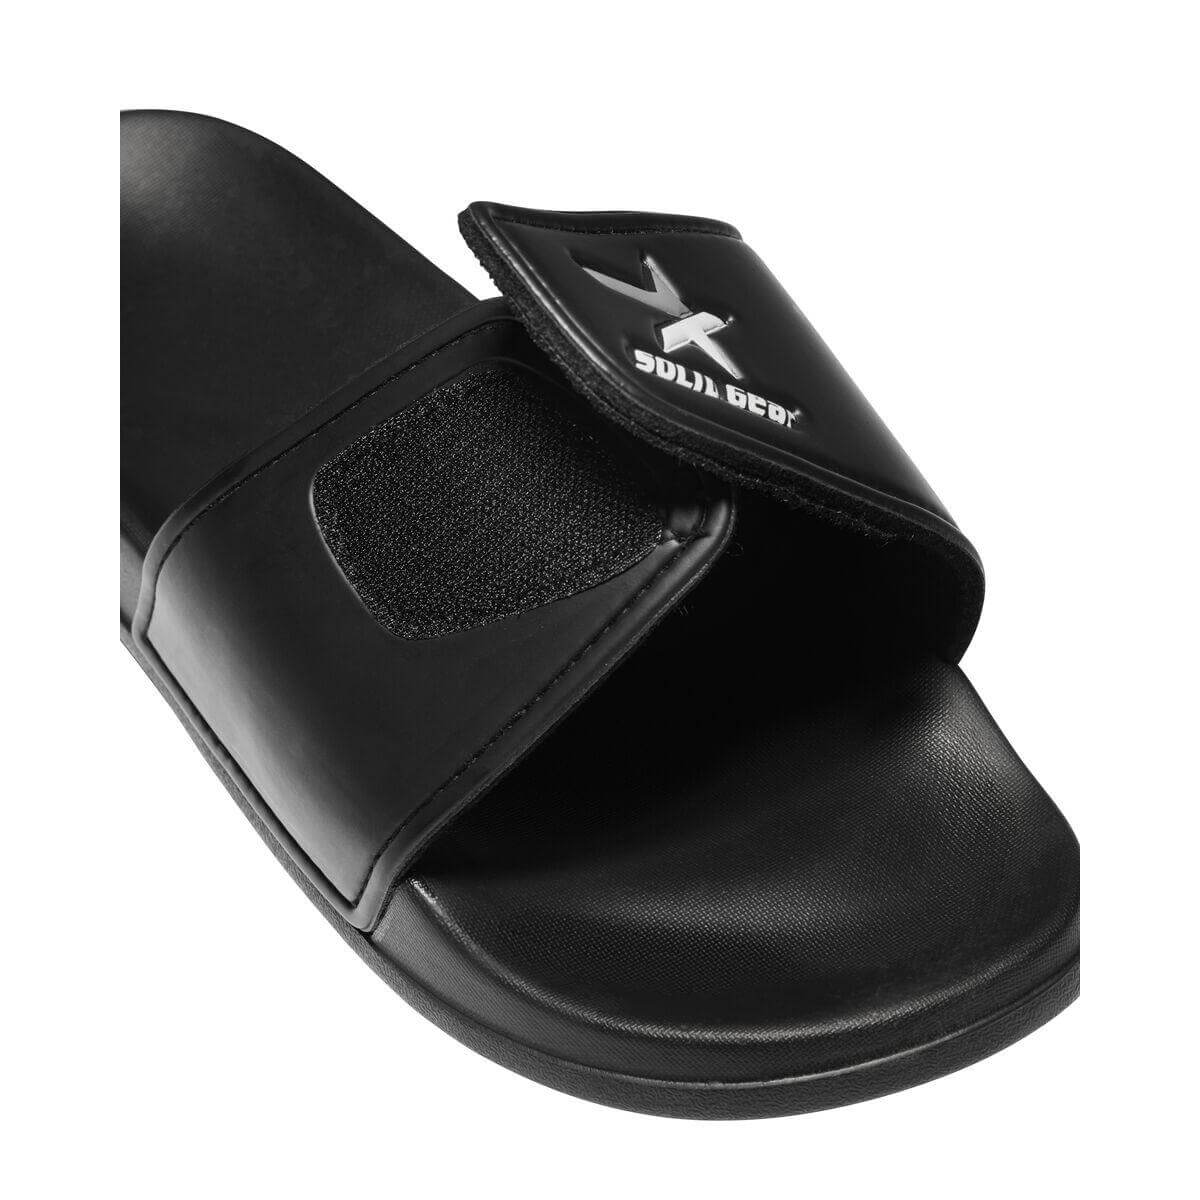 Solid Gear 10101 SLIDE MOON Non Safety Flip Flop Sandals Black 08 #colour_black